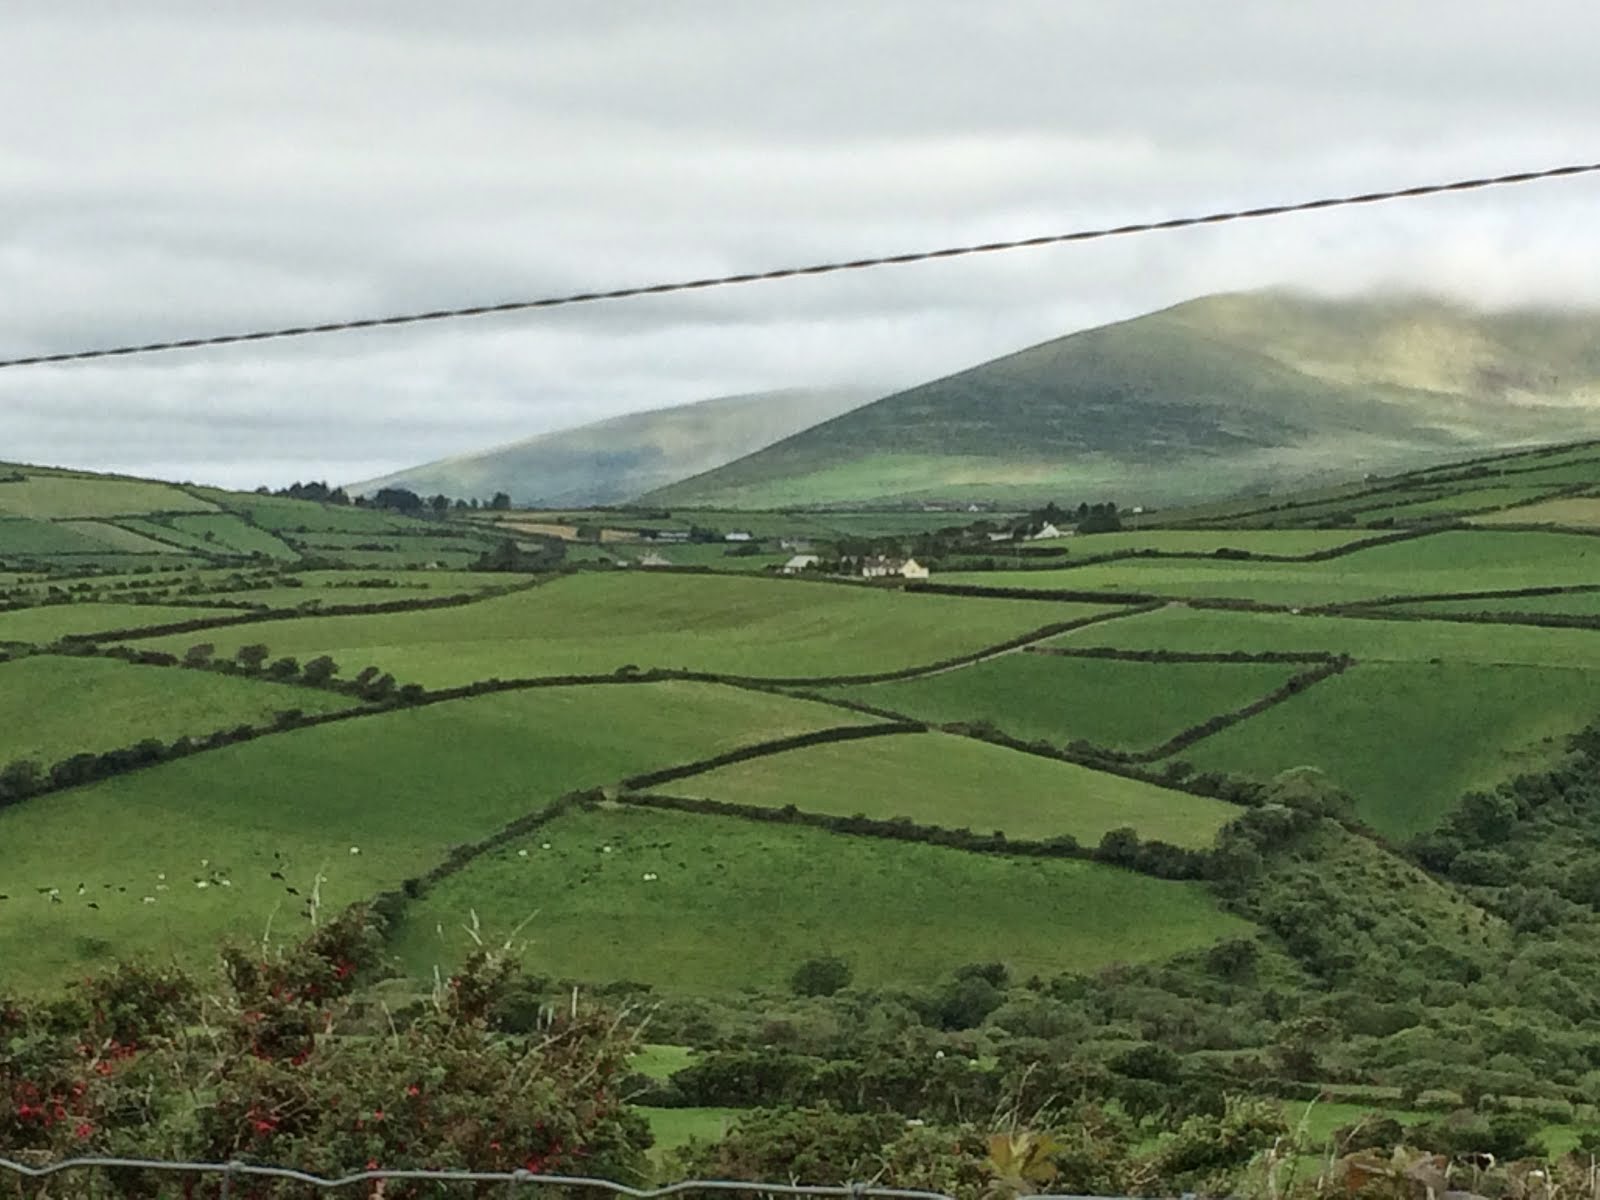 How many shades of green does Ireland have?